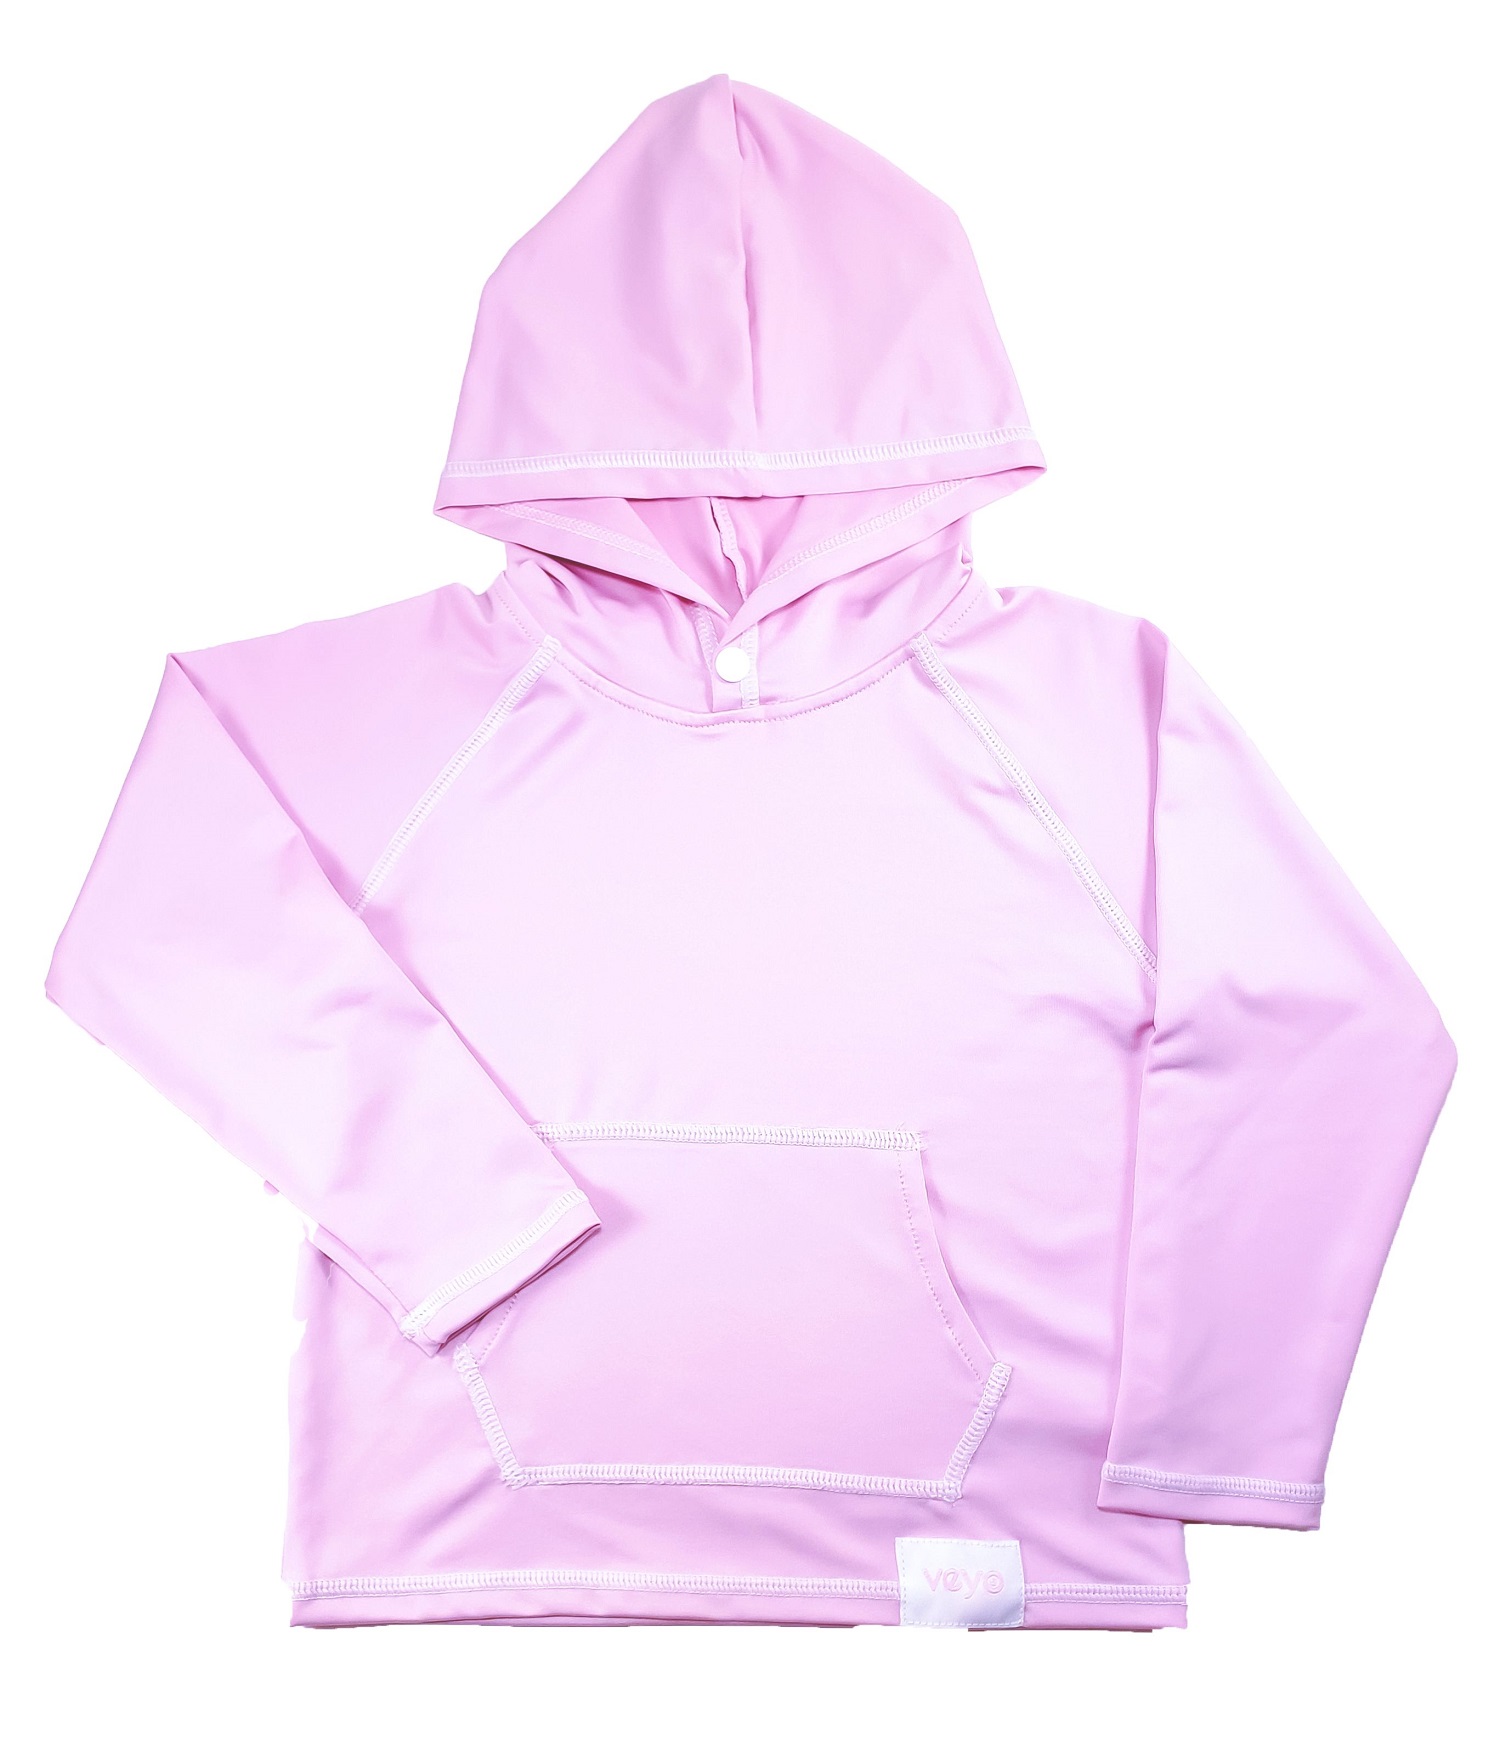 Sun Hoodie Veyo Kids Boys /& Girls UV Protection Shirt with Hood Lightweight and Breathable